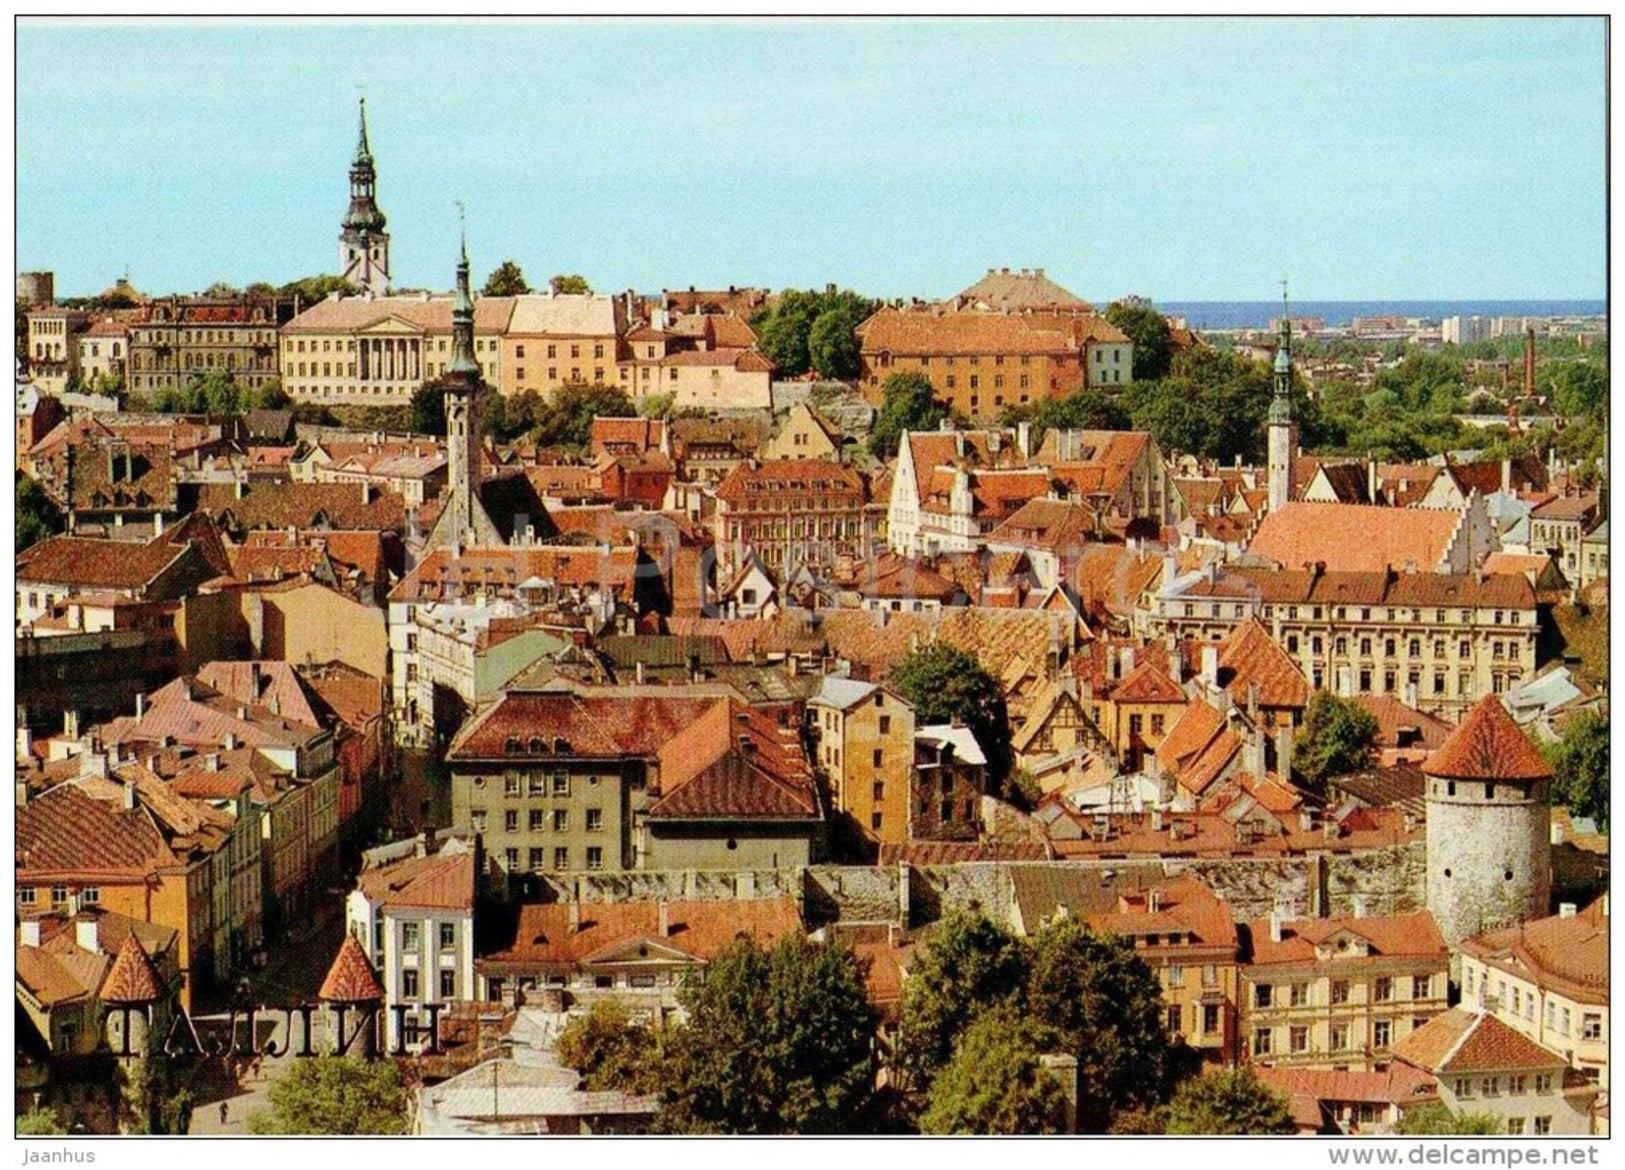 The Roofs of the Old Town - Tallinn - 1987 - Estonia USSR - unused - JH Postcards